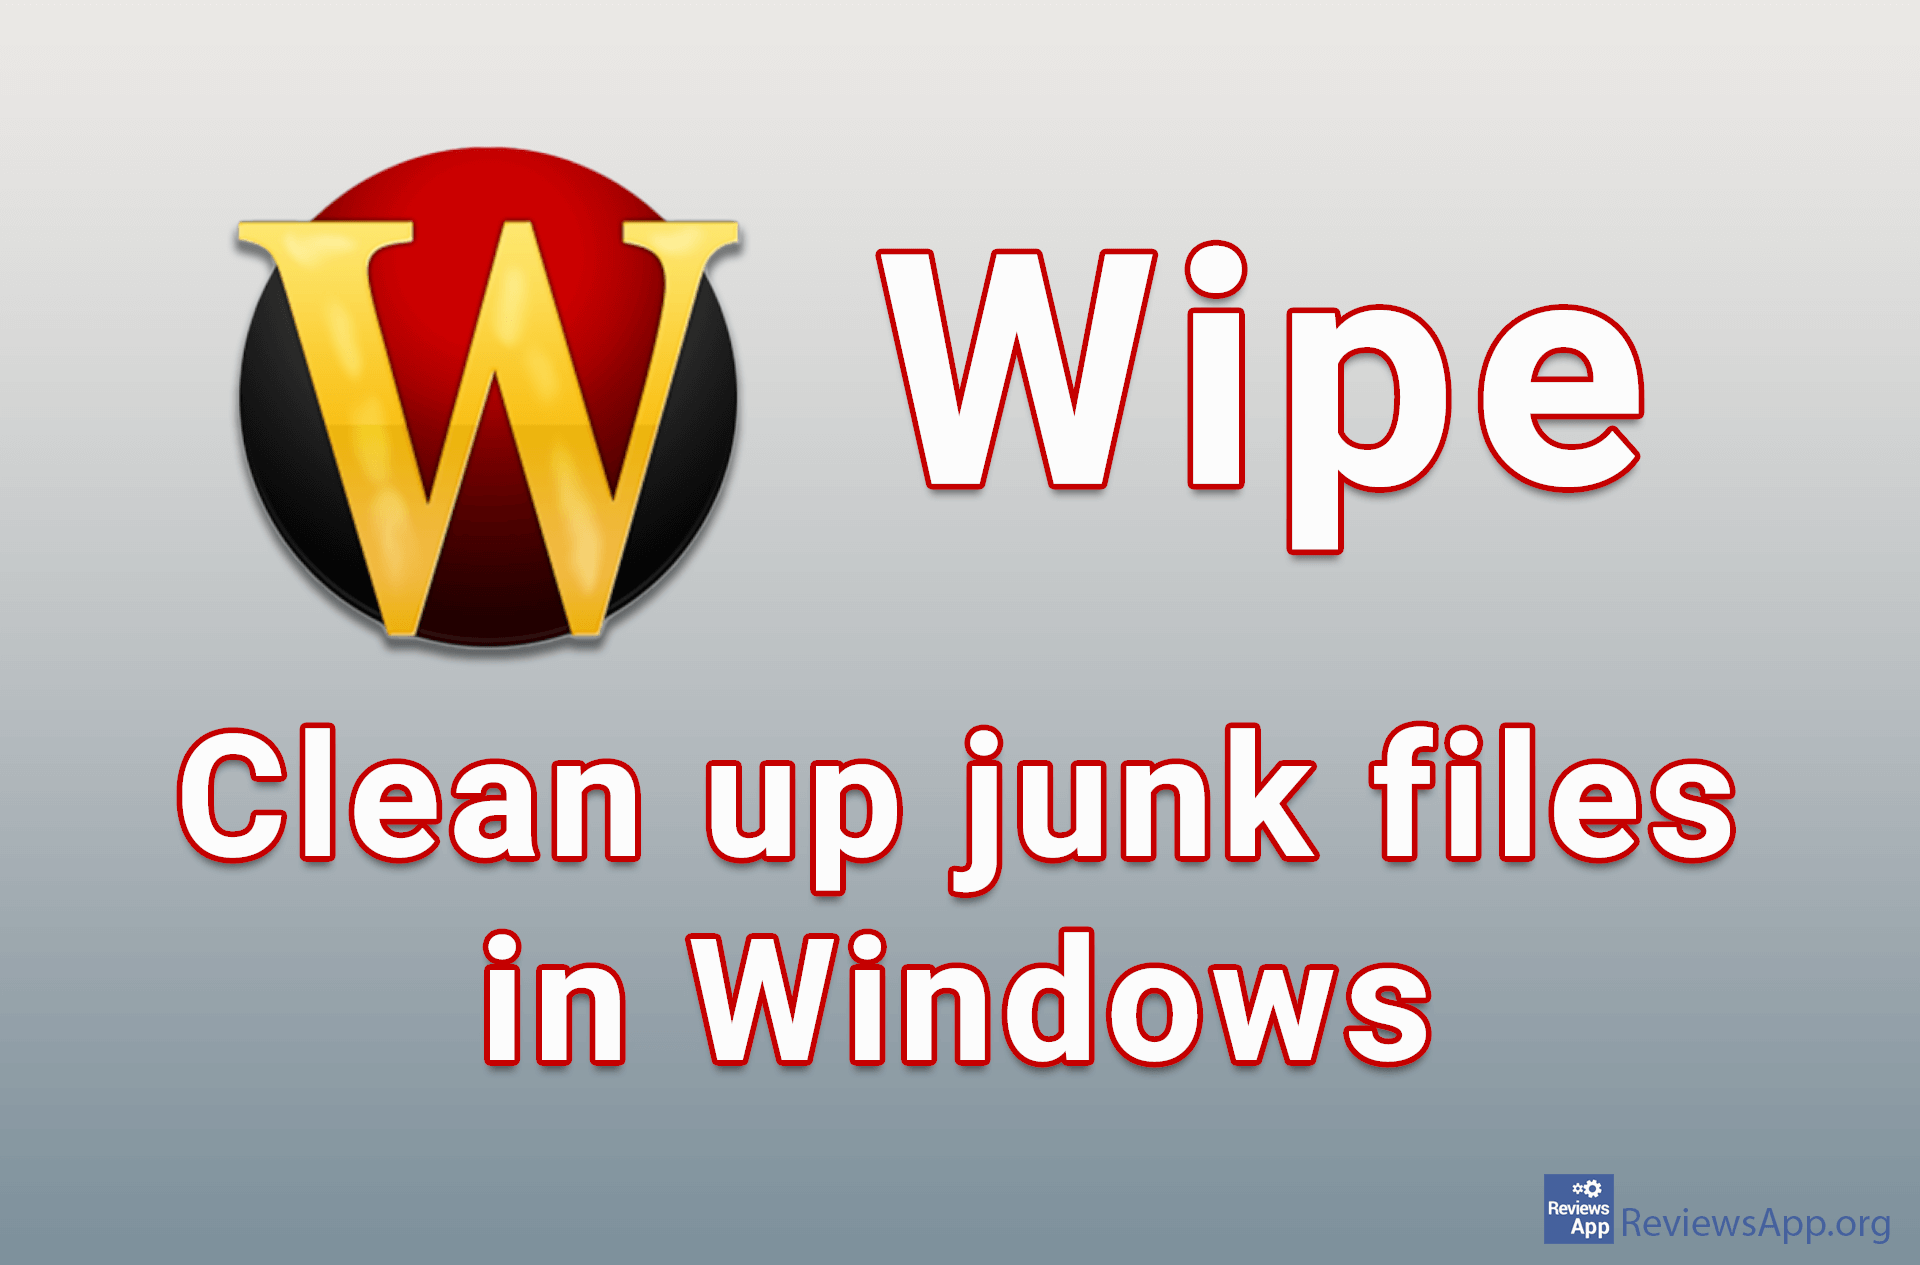 Wipe – clean up junk files in Windows